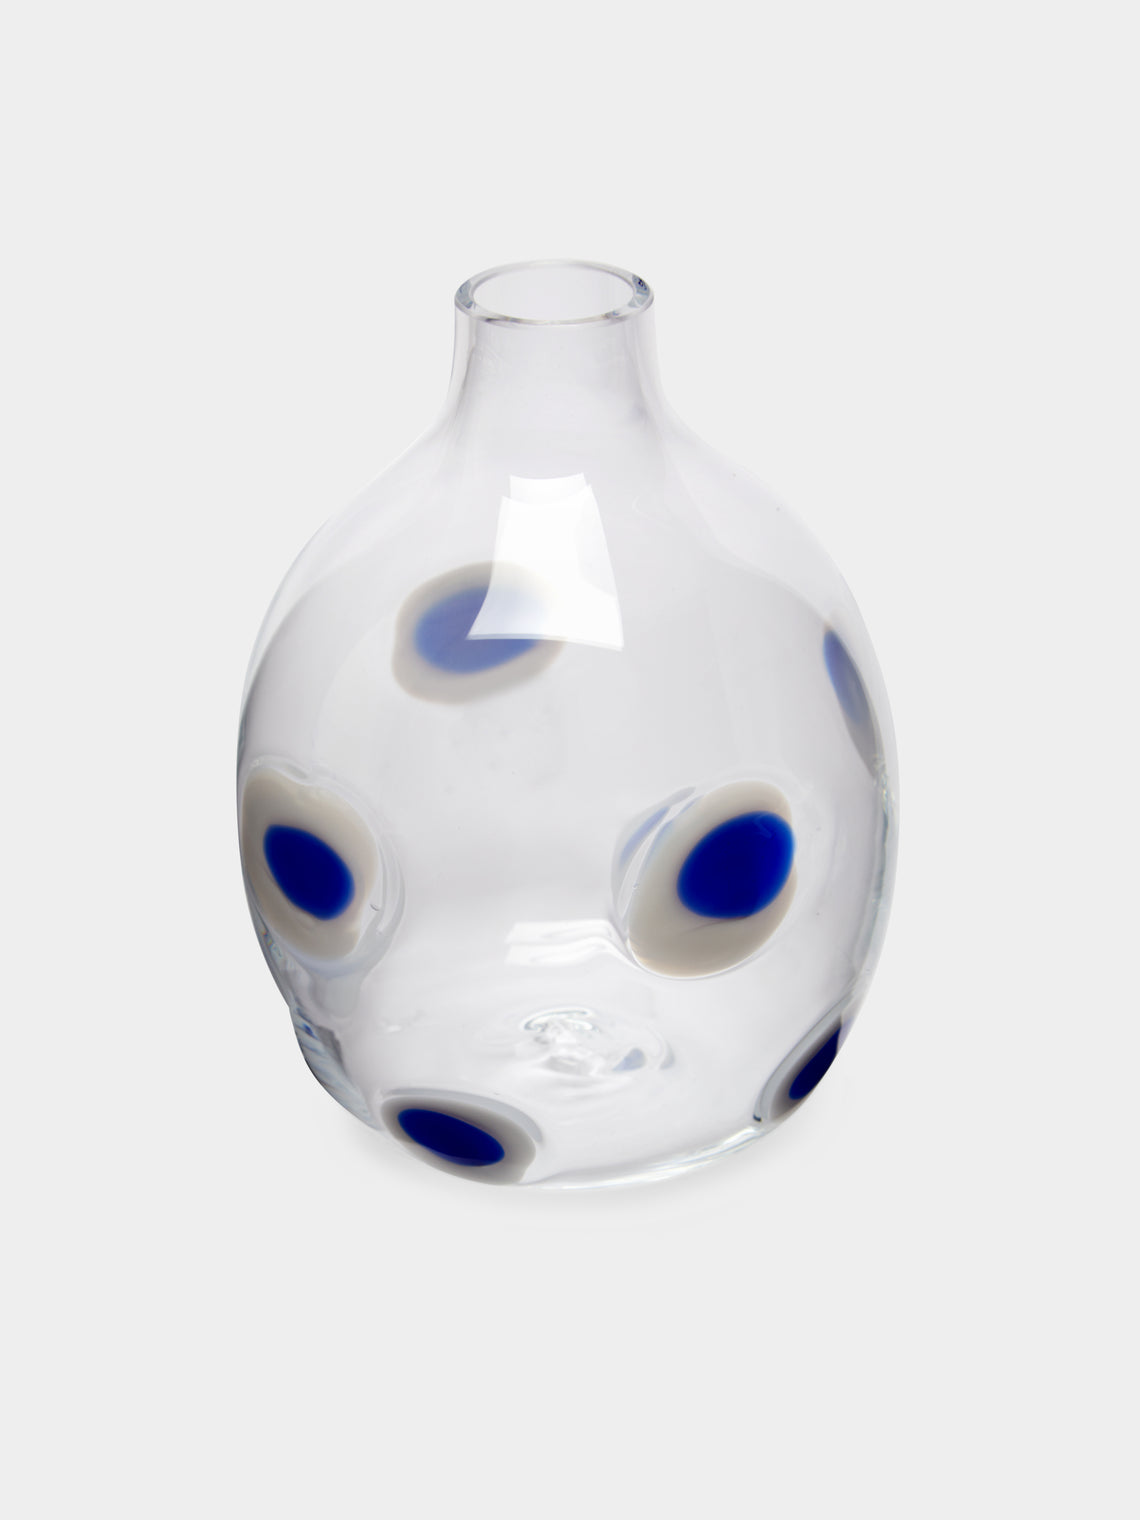 Carlo Moretti - Hand-Blown Murano Glass Bud Vase -  - ABASK - 